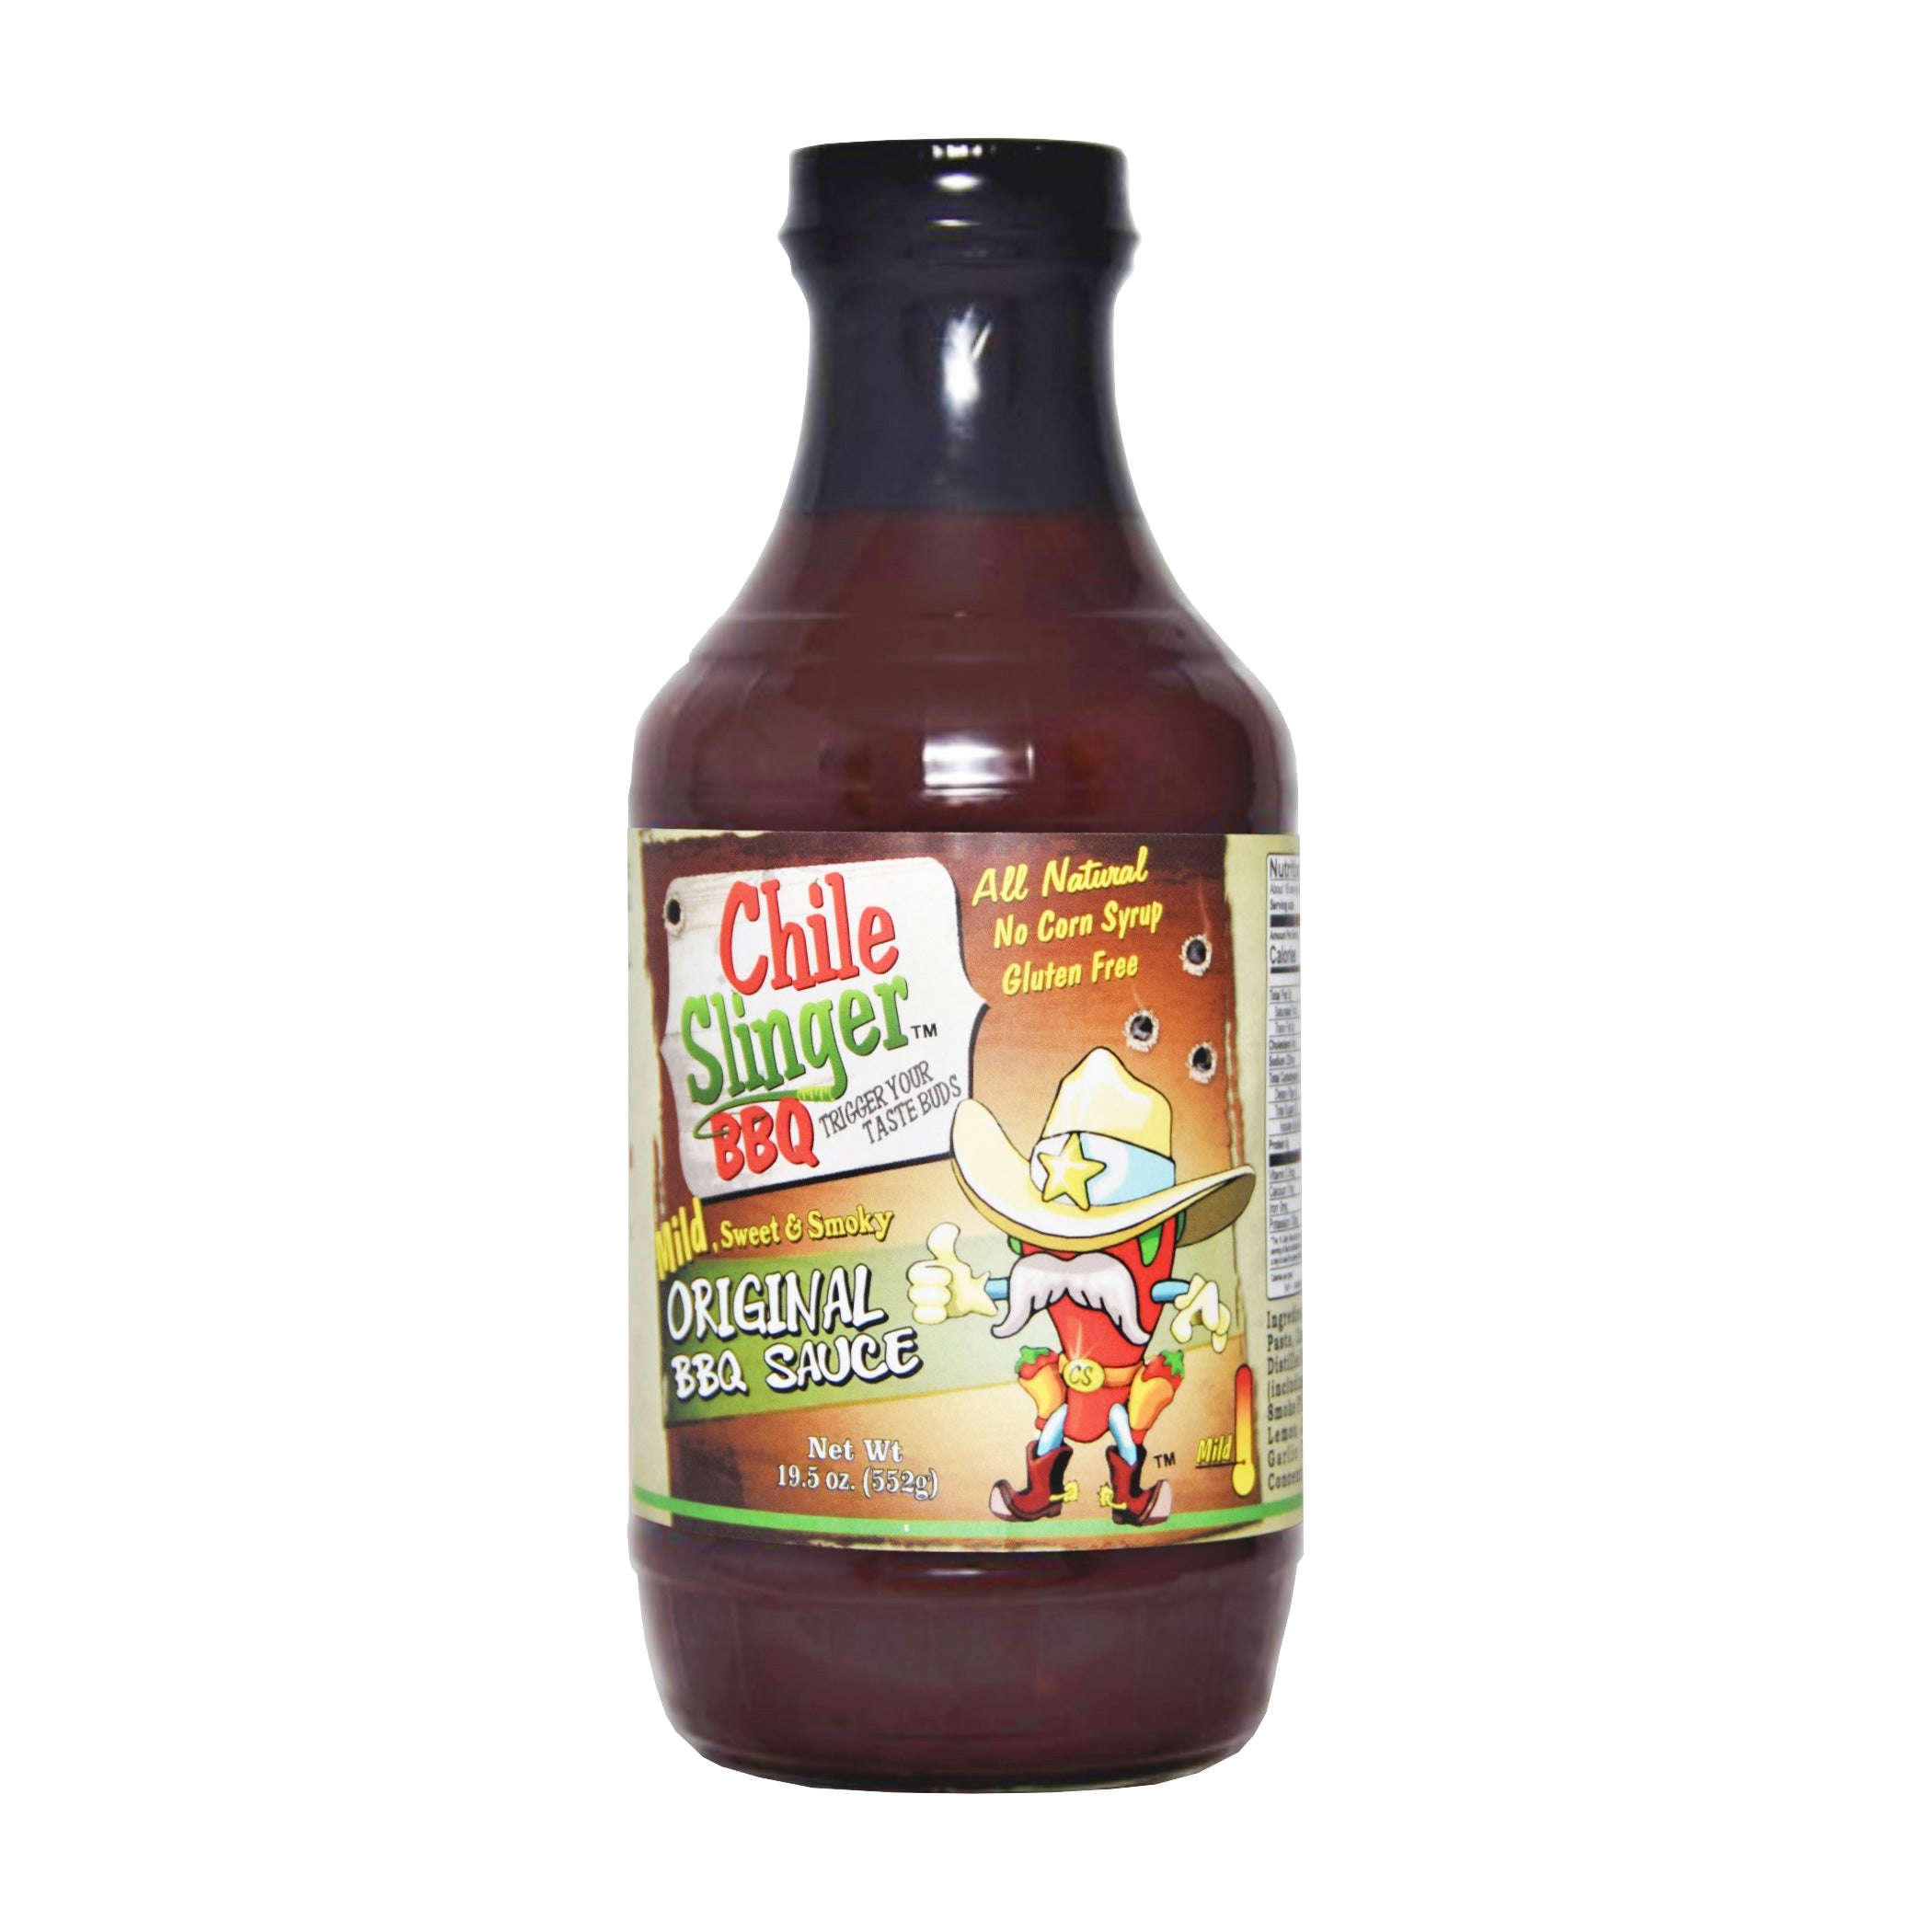 Chile Slinger Original BBQ Sauce